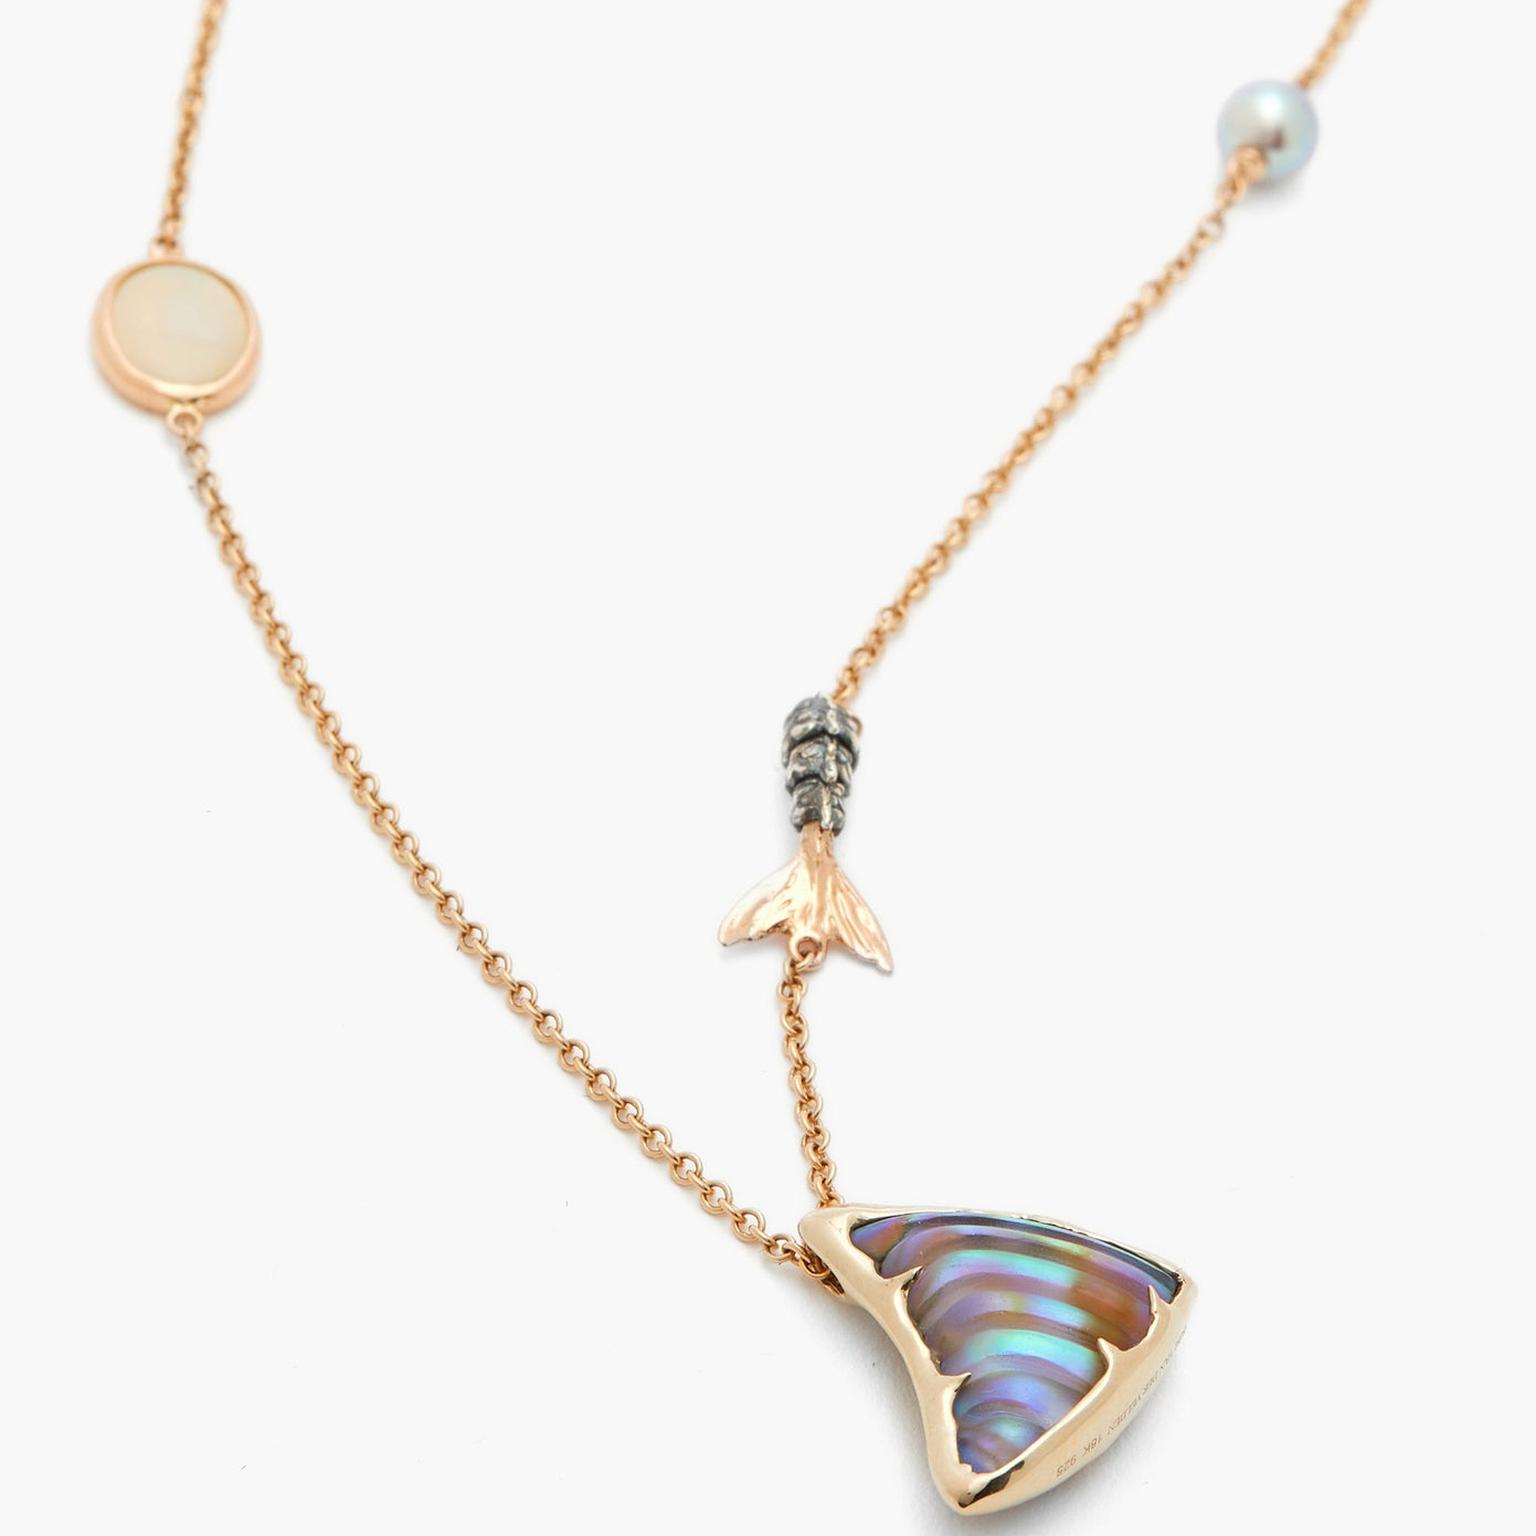 Opal necklace by Bibi van der Velden